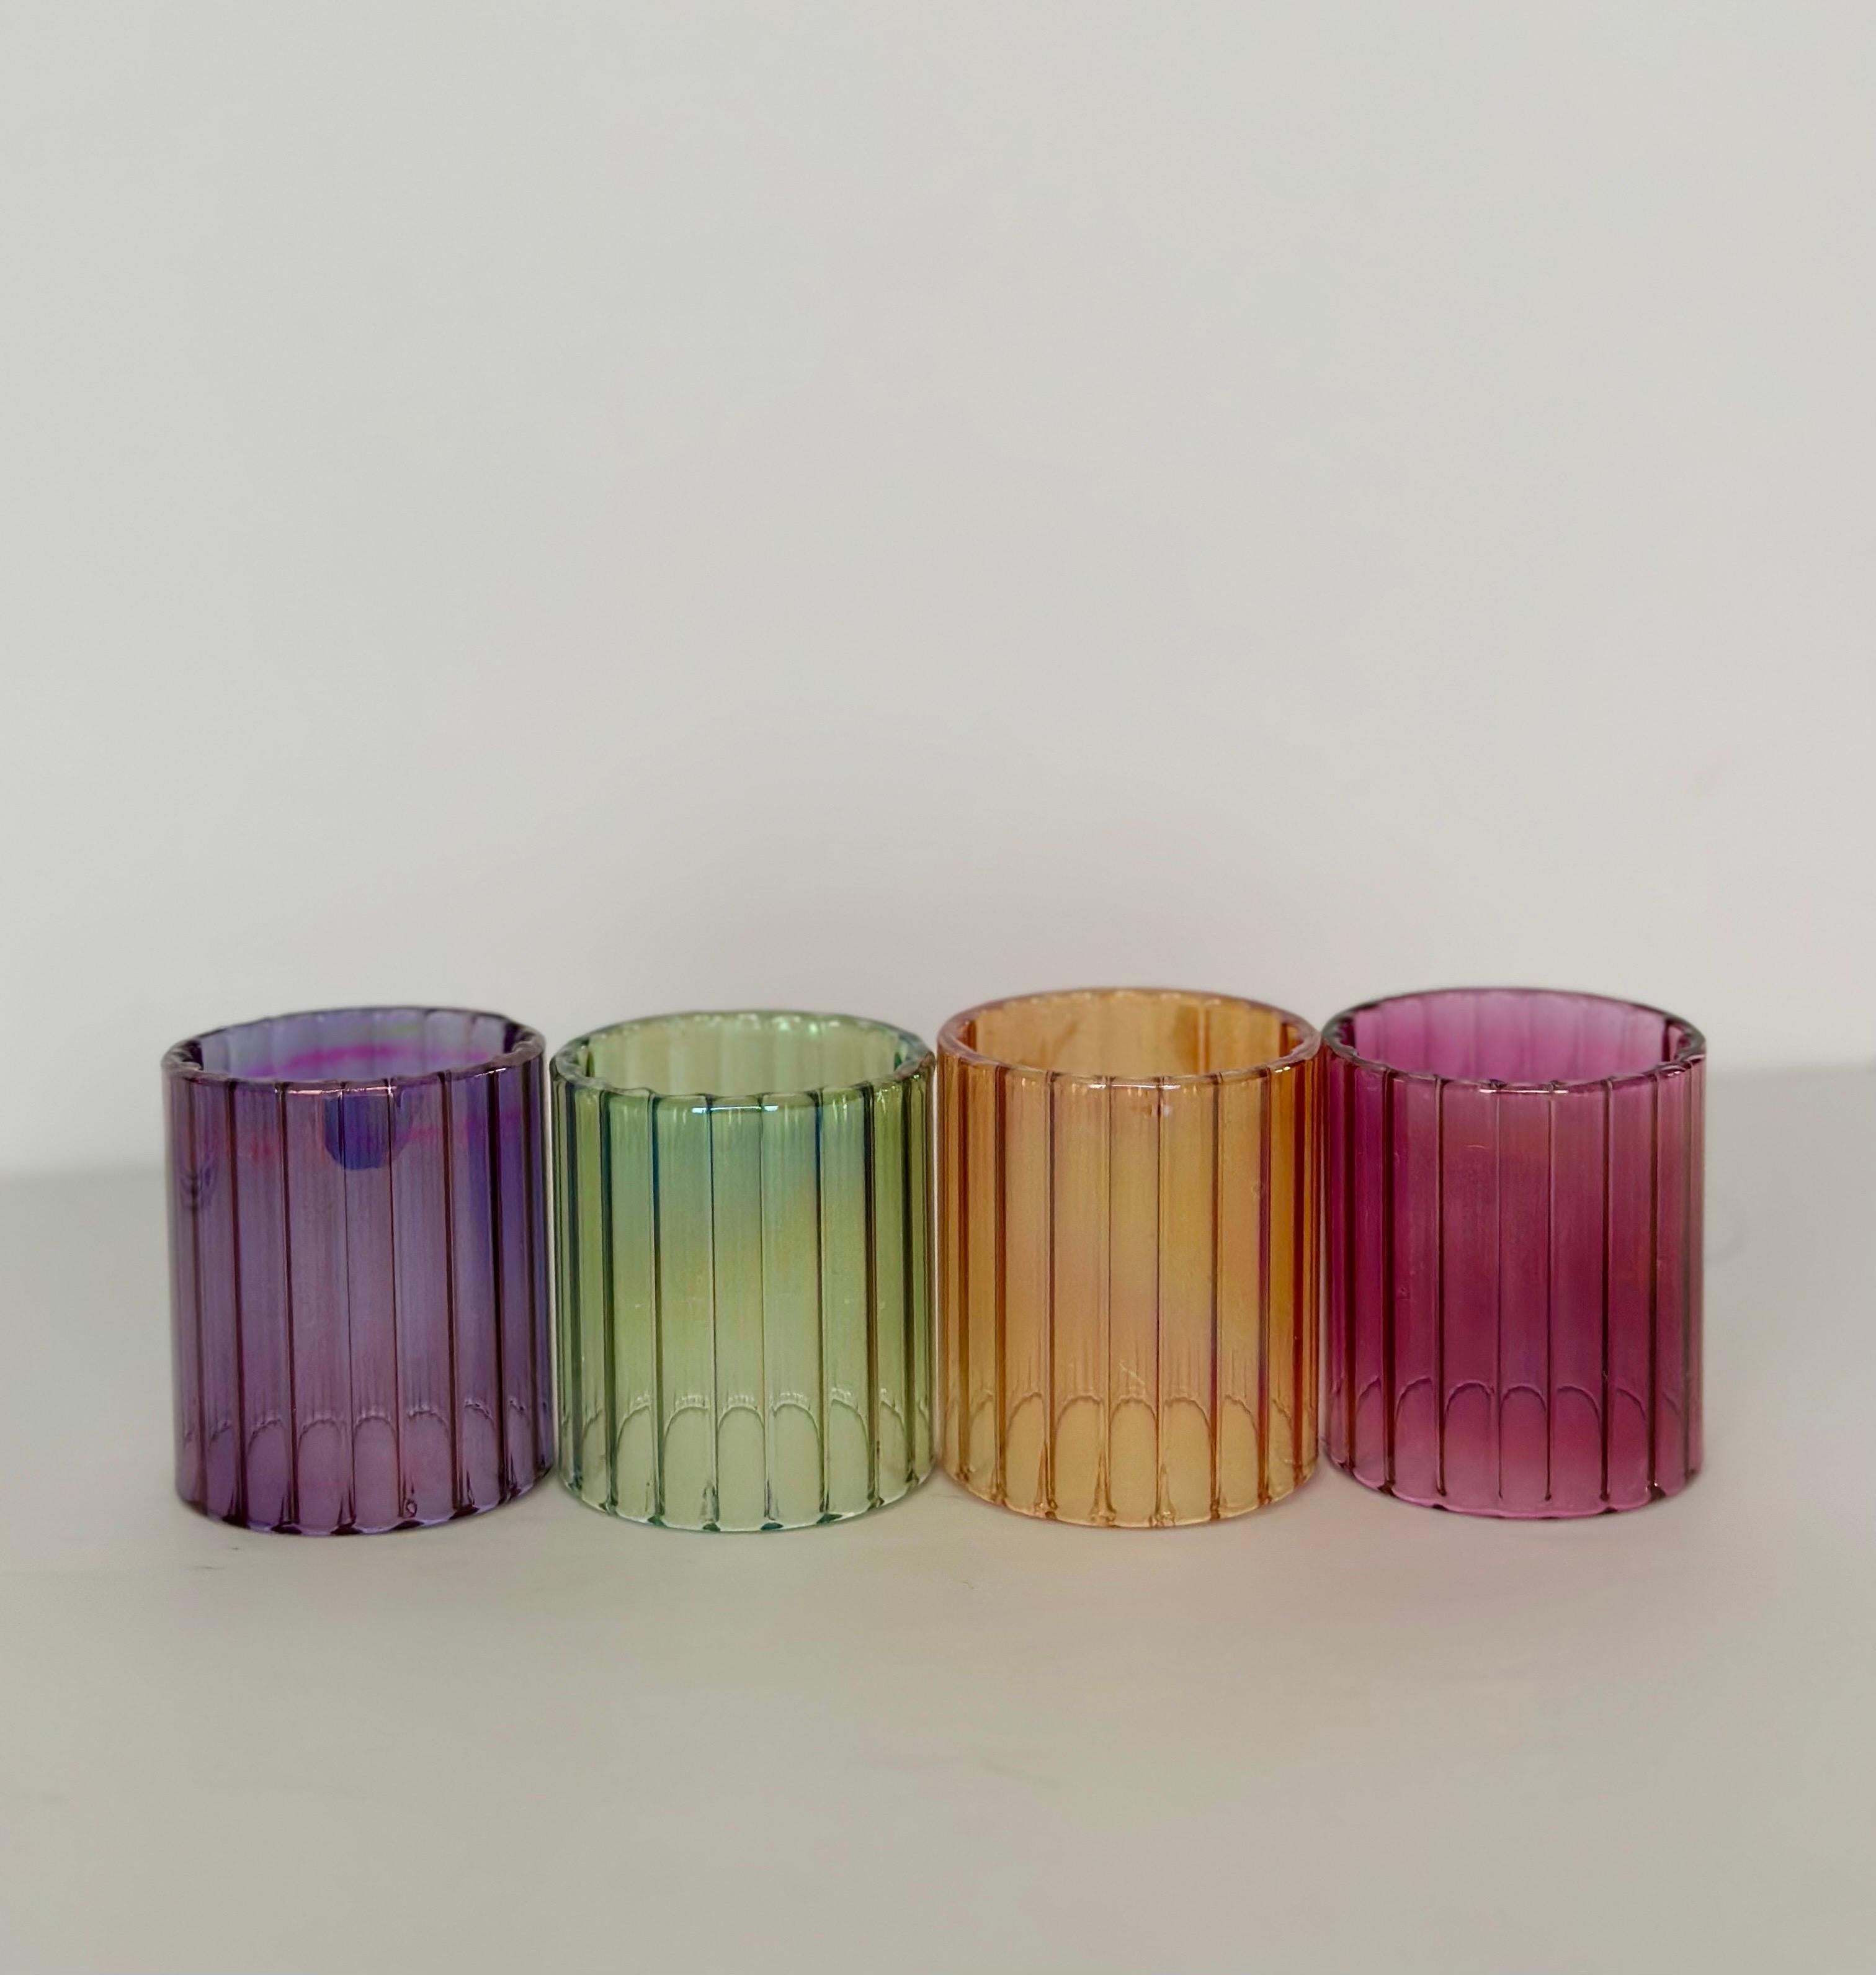 Late 20th Century 1990s Italian Neiman Marcus Handblown Glass Napkin Rings – Set of 4 